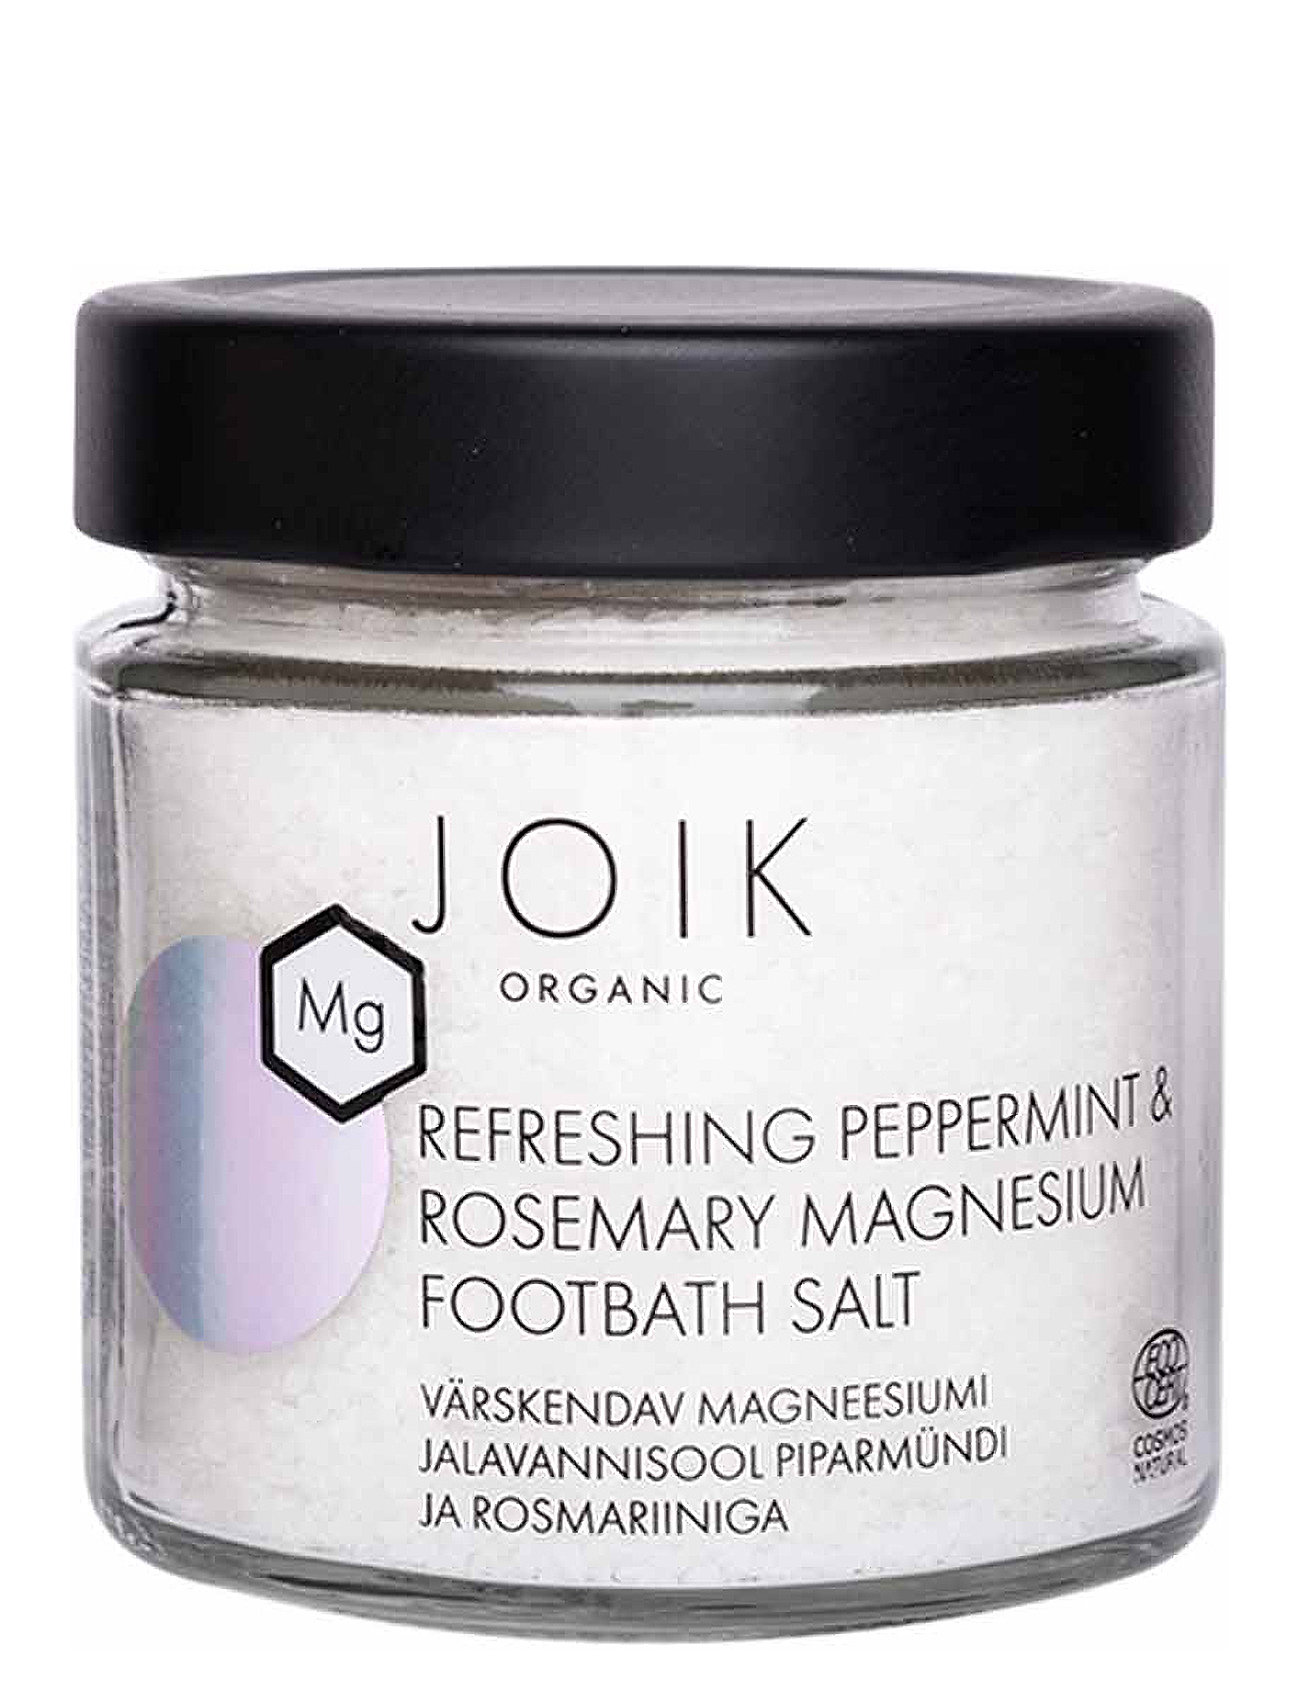 Joik Organic Refreshing Magnesium Footbath Salt Beauty Women Skin Care Bath Products Nude JOIK